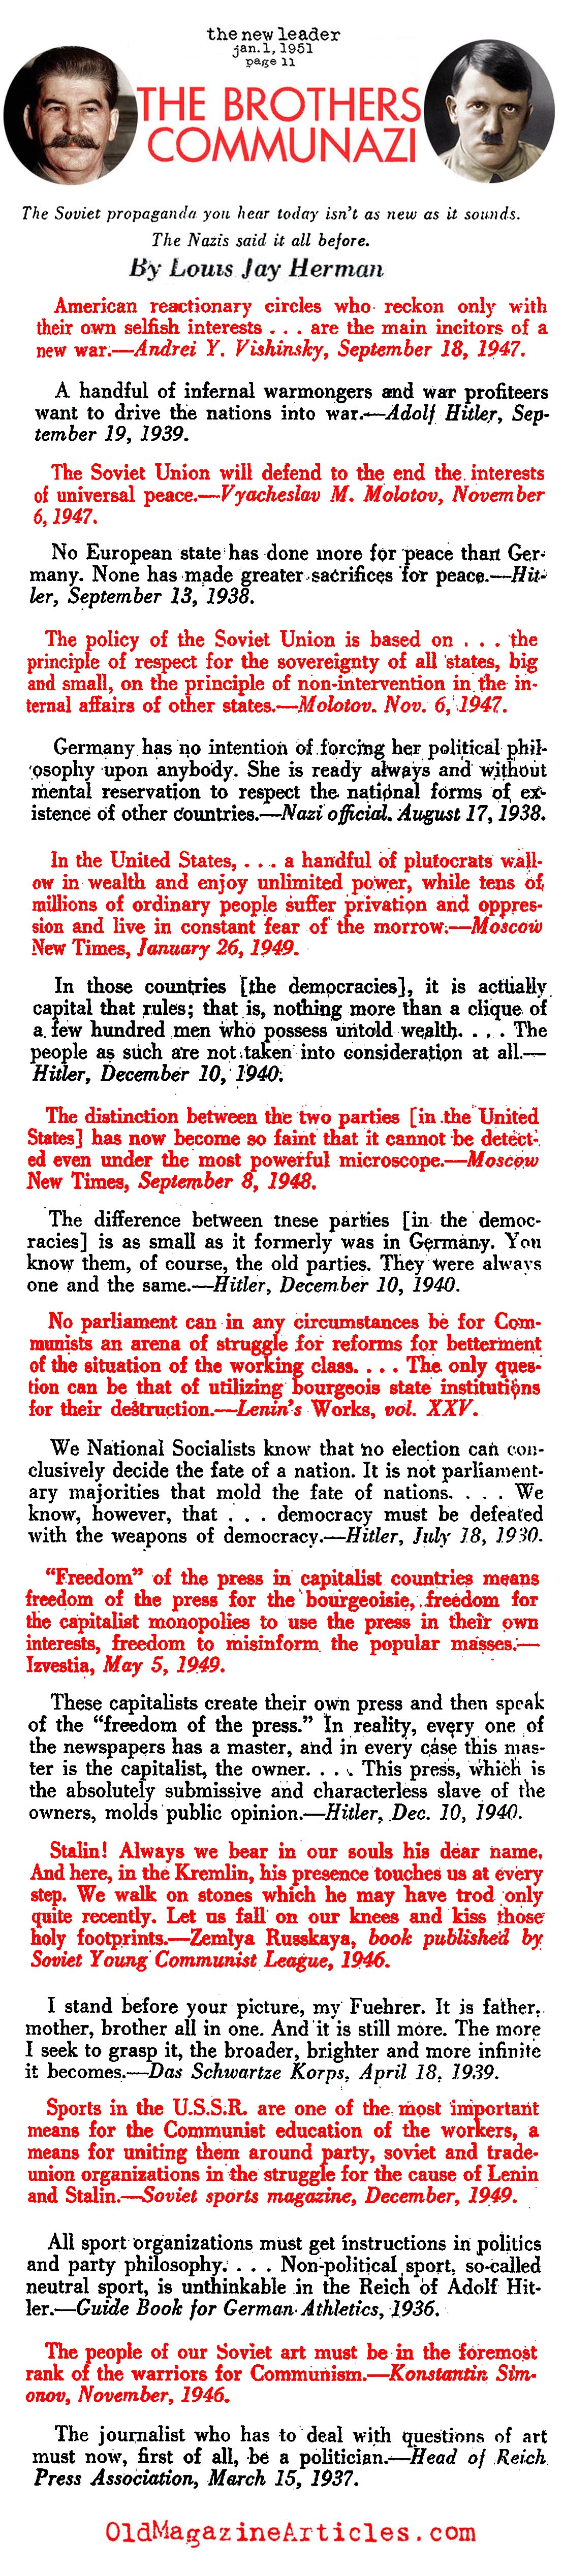 Soviet and Nazi Rhetoric Compared (The New Leader Magazine, 1951